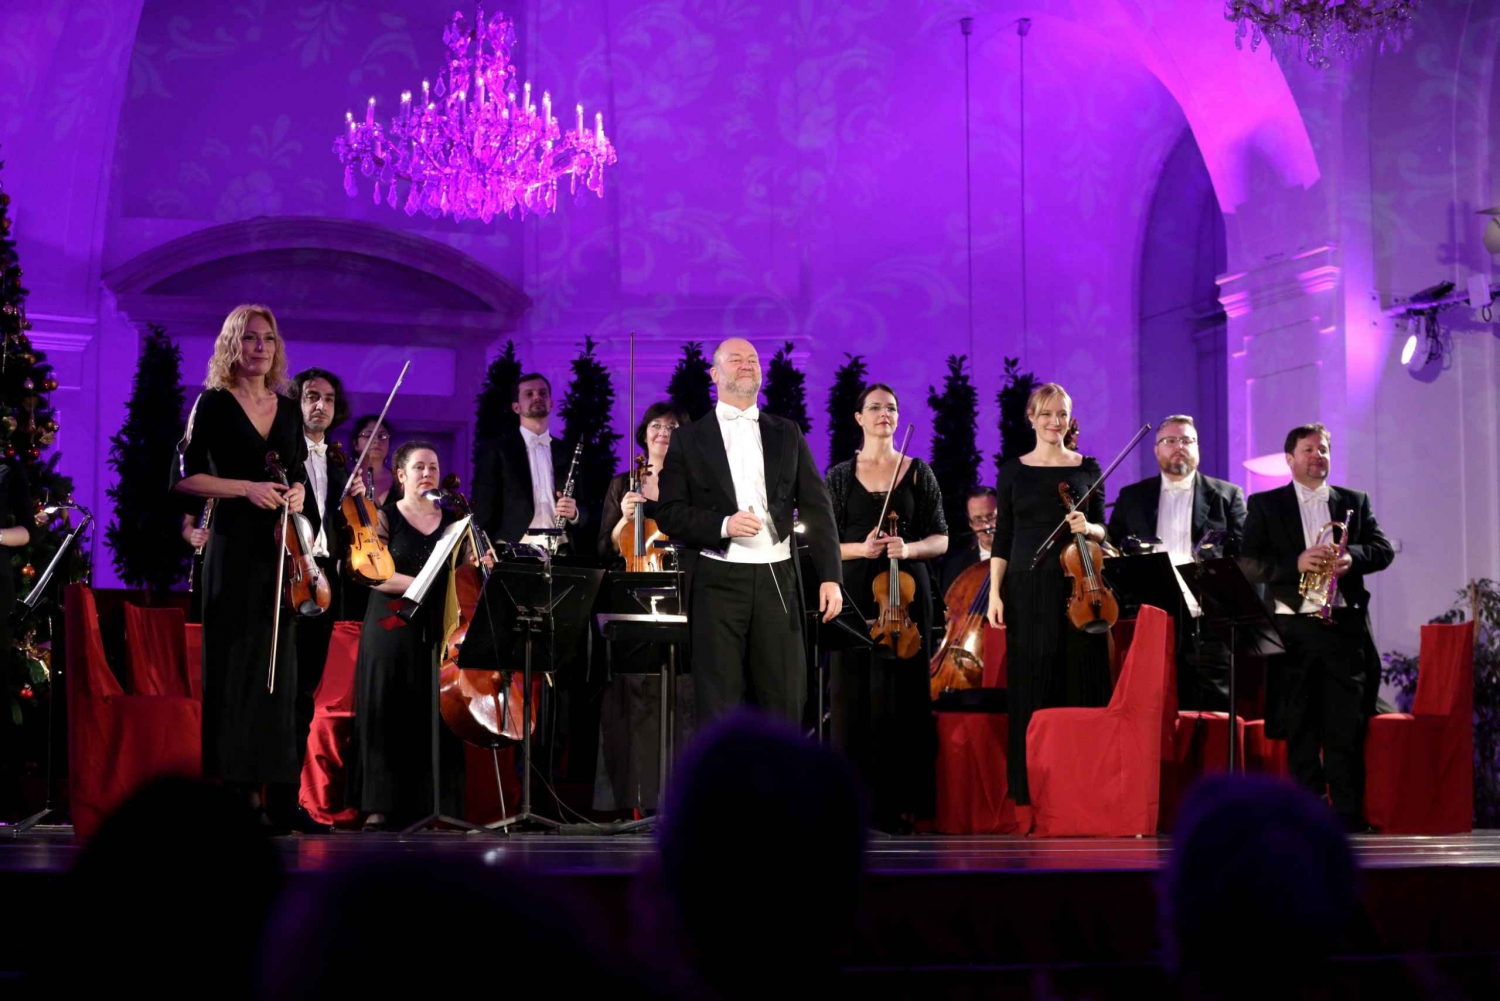 Wenen: After-Hours Schönbrunn Paleis Entree & Concert Ticket